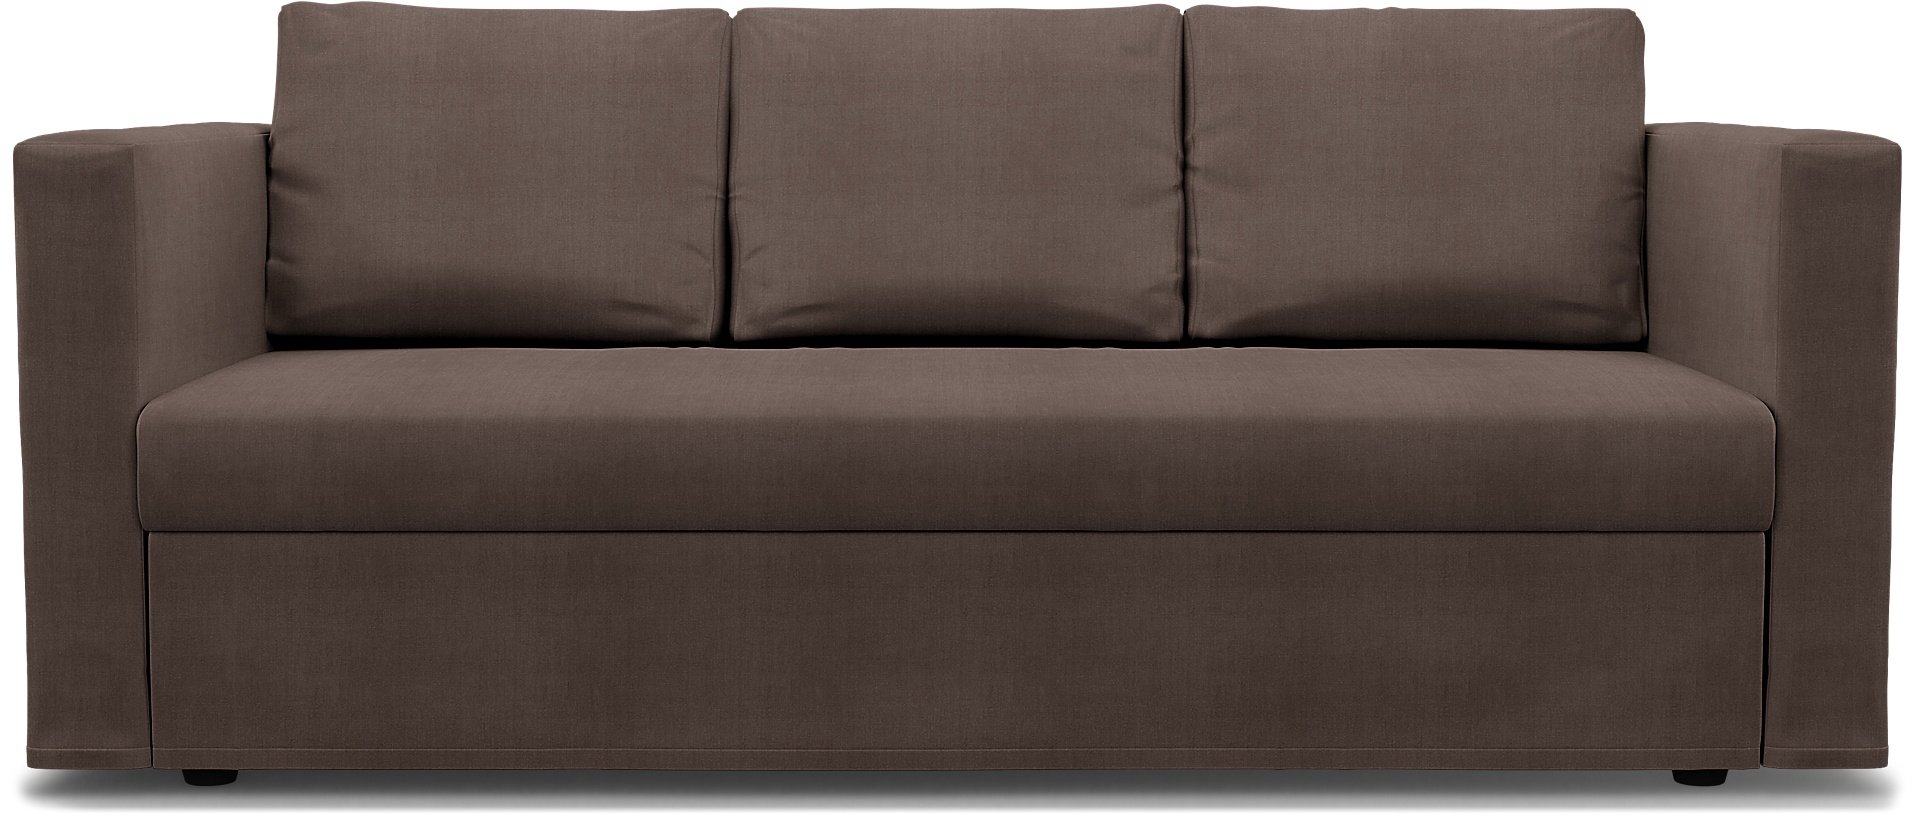 IKEA - Friheten 3 Seater Sofa Bed Cover, Cocoa, Linen - Bemz